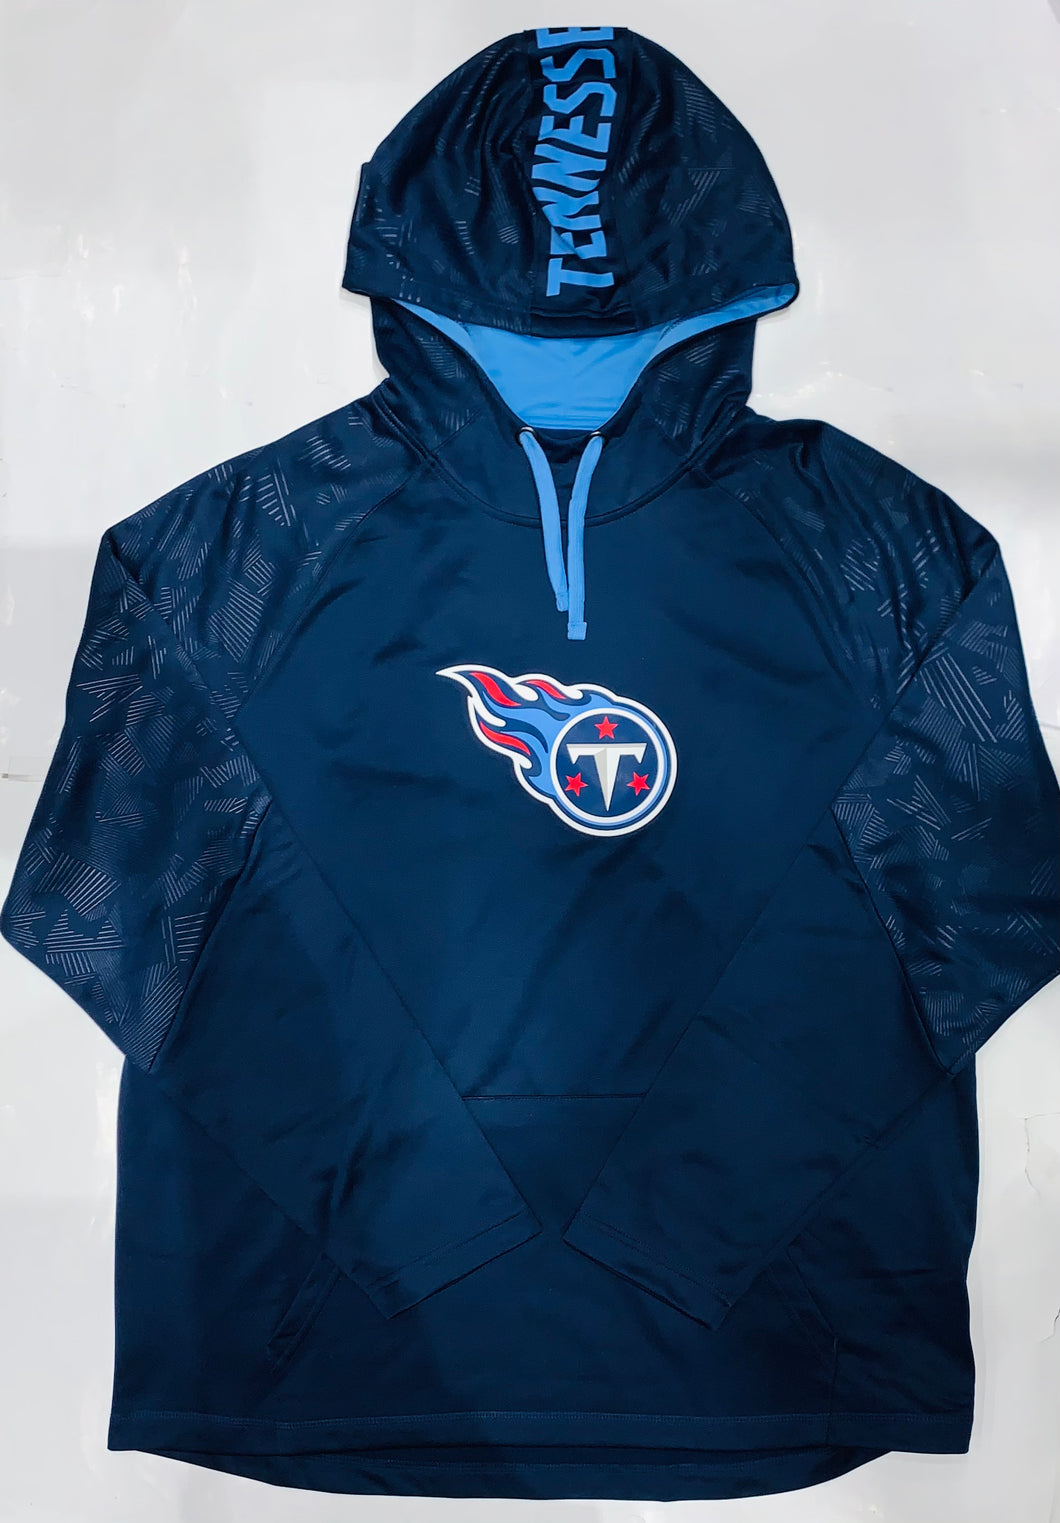 Tennessee Titans Fanatics Navy/Light Blue Pullover Hoodie